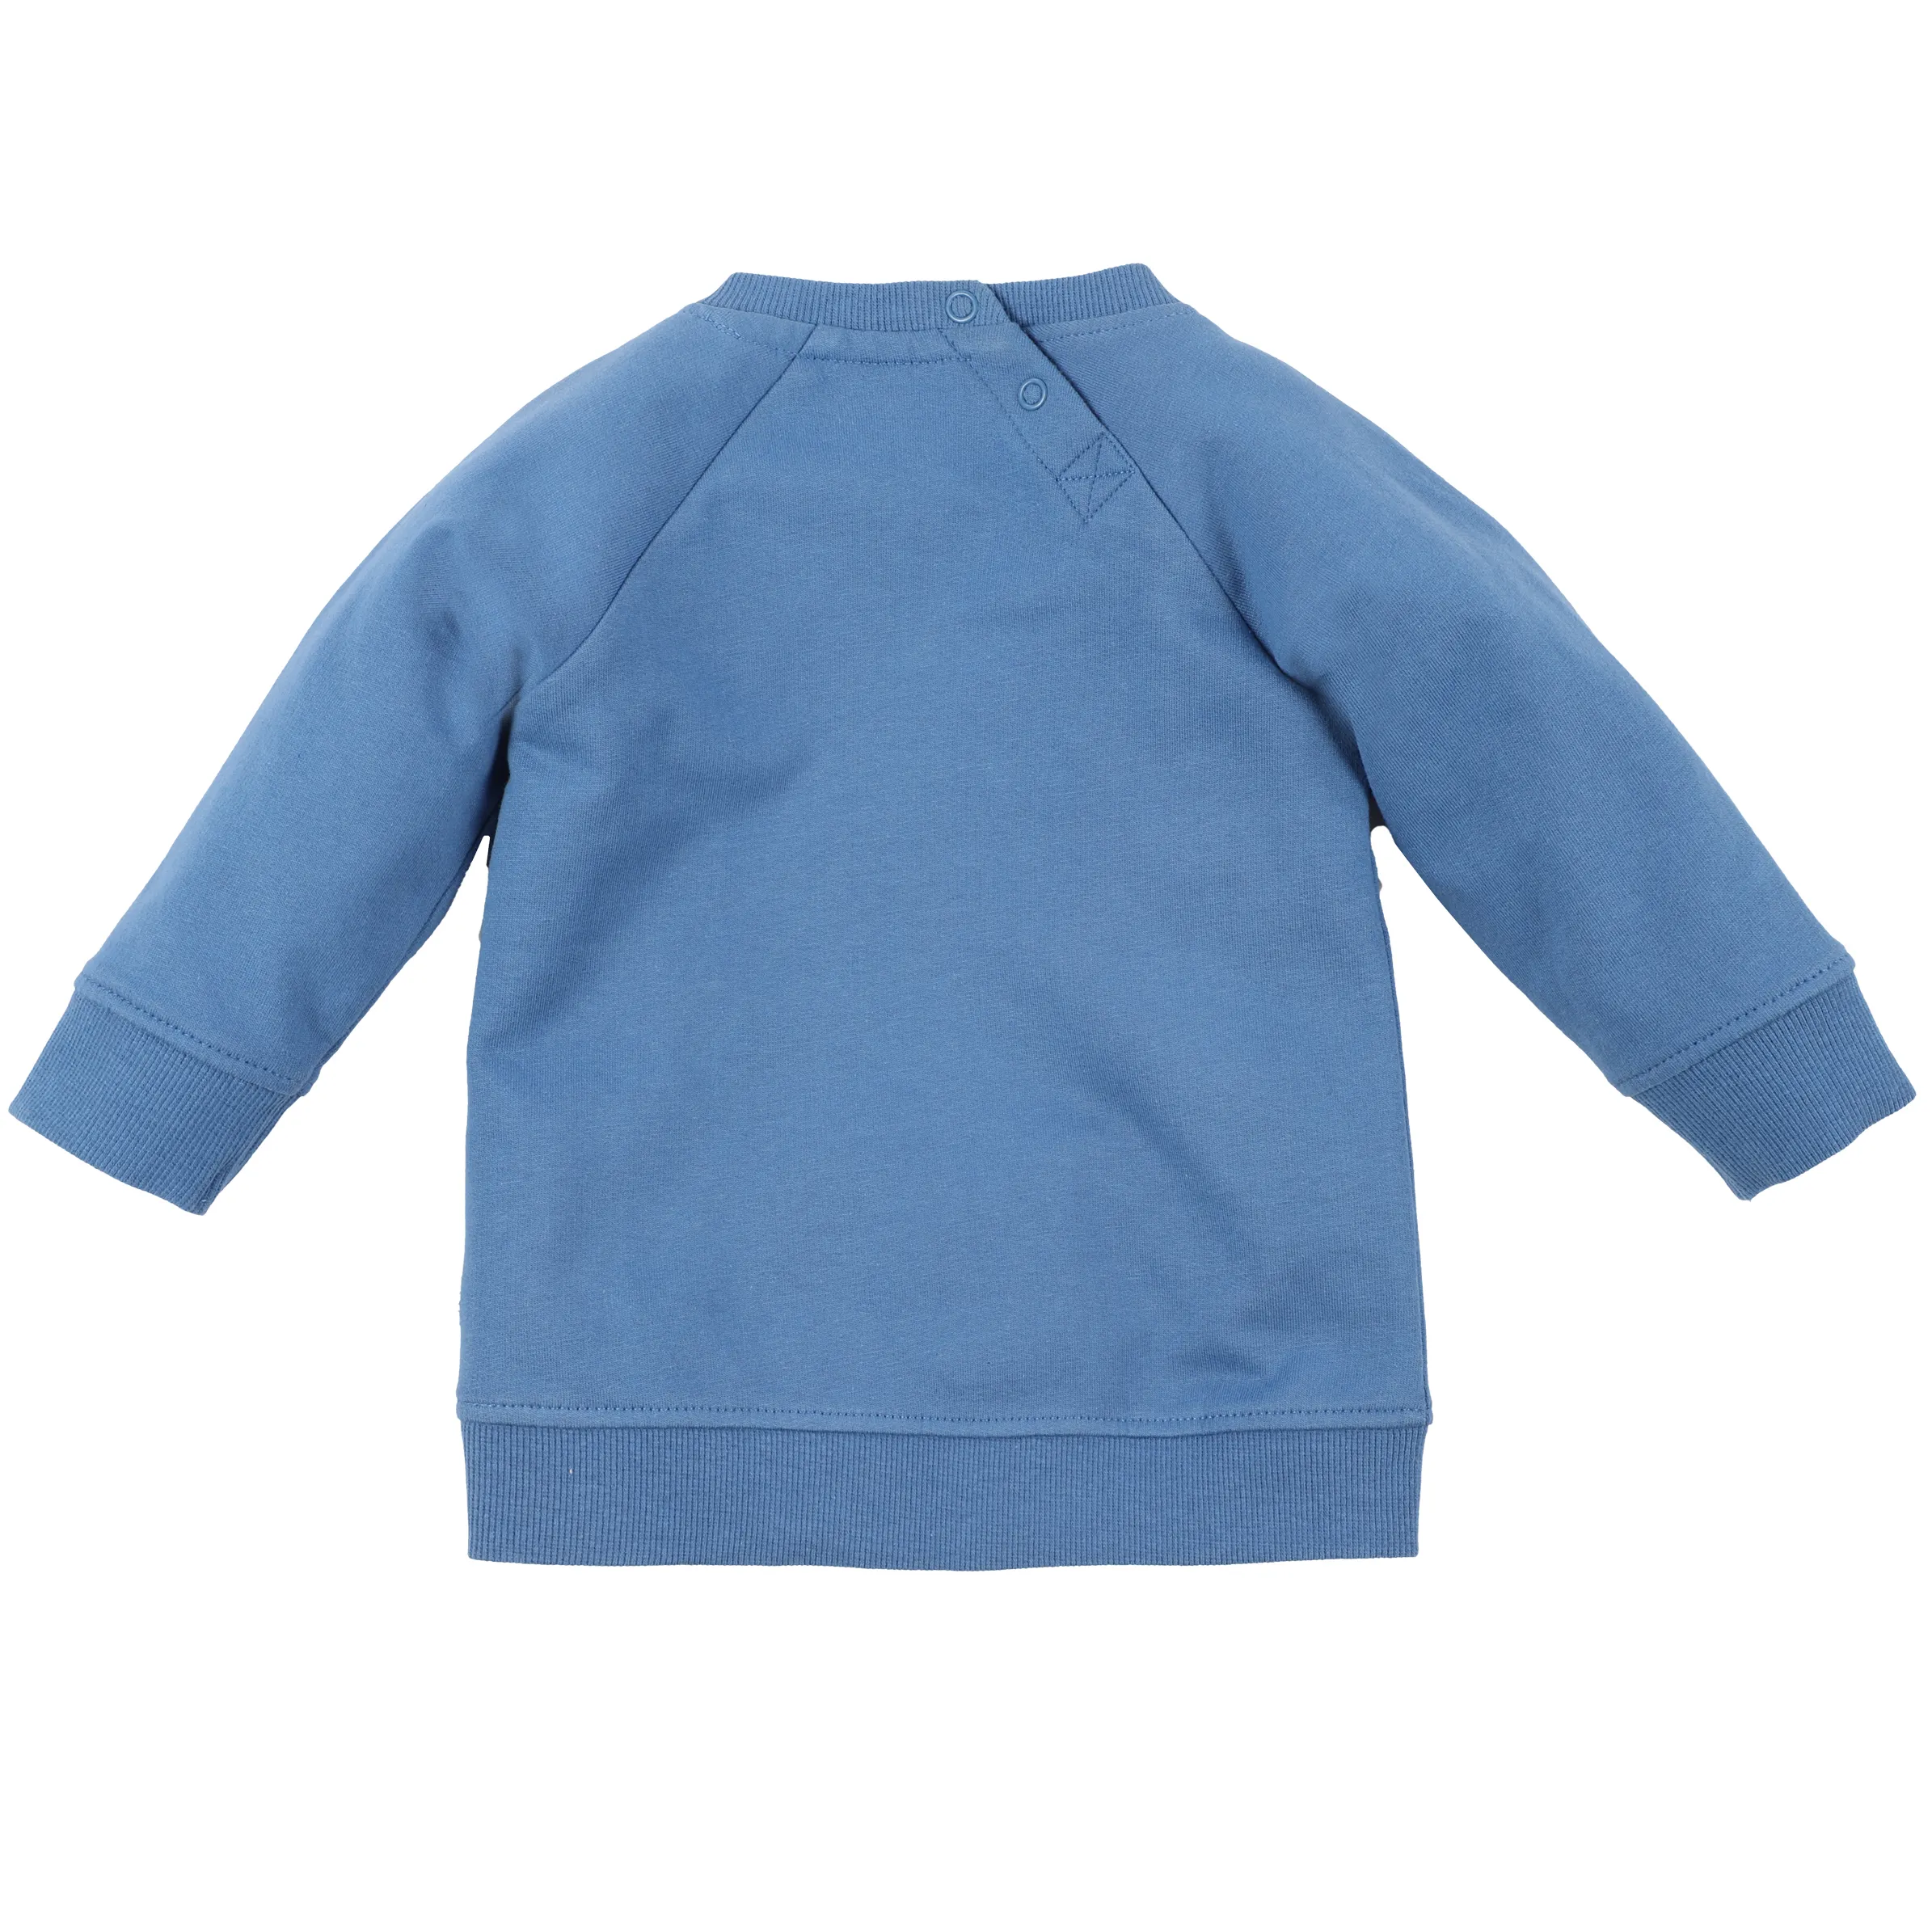 Bubble Gum BJ Sweatshirt in blau mit Bärchendruck Blau 884373 BLAU 2